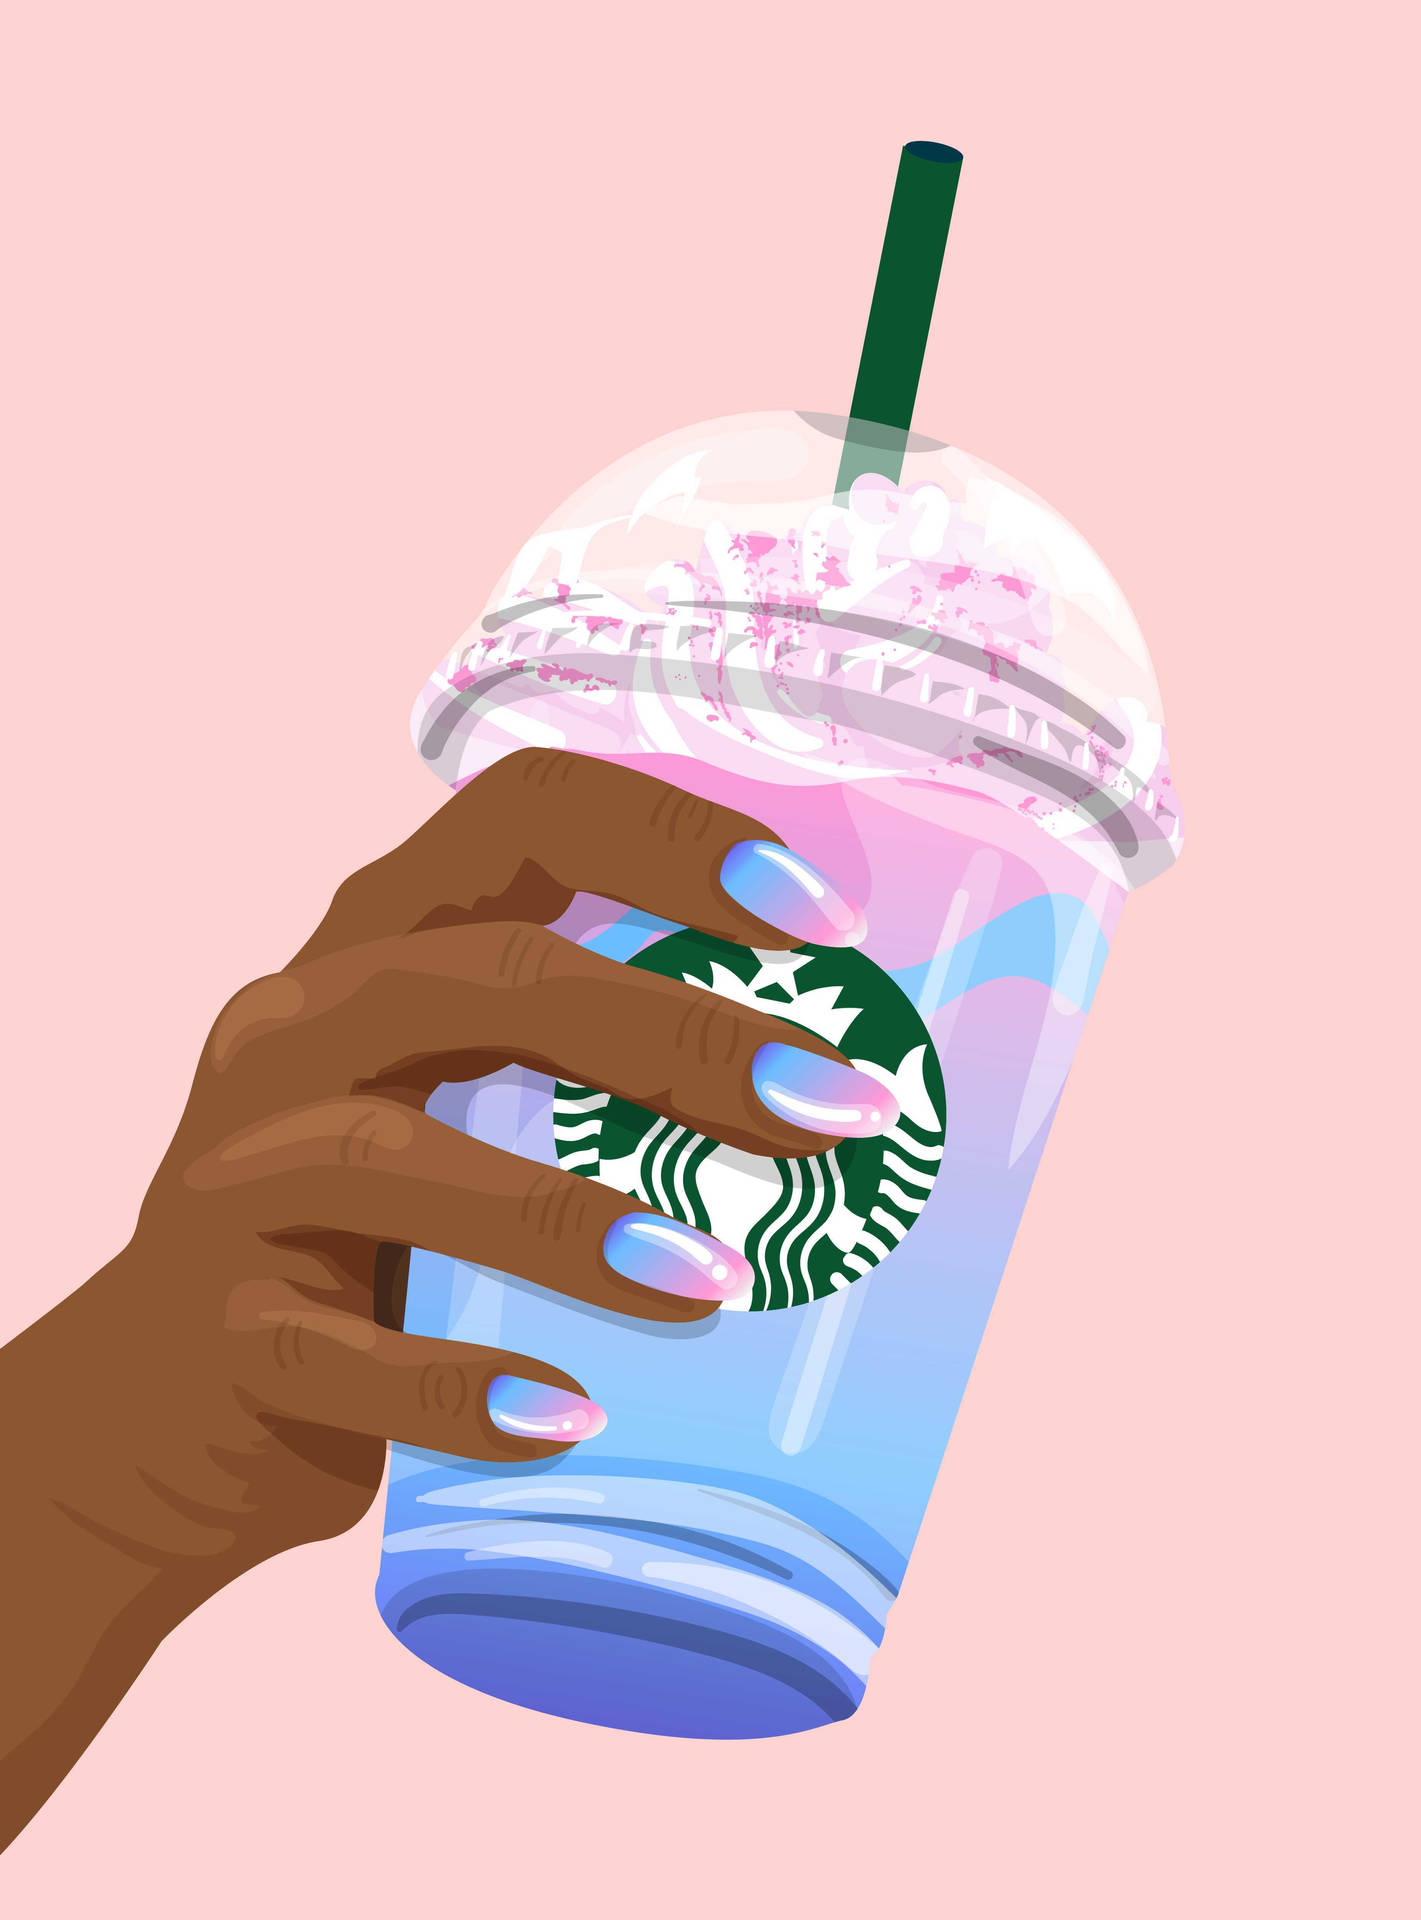 Download Starbucks Unicorn Frappuccino Art Wallpaper | Wallpapers.com